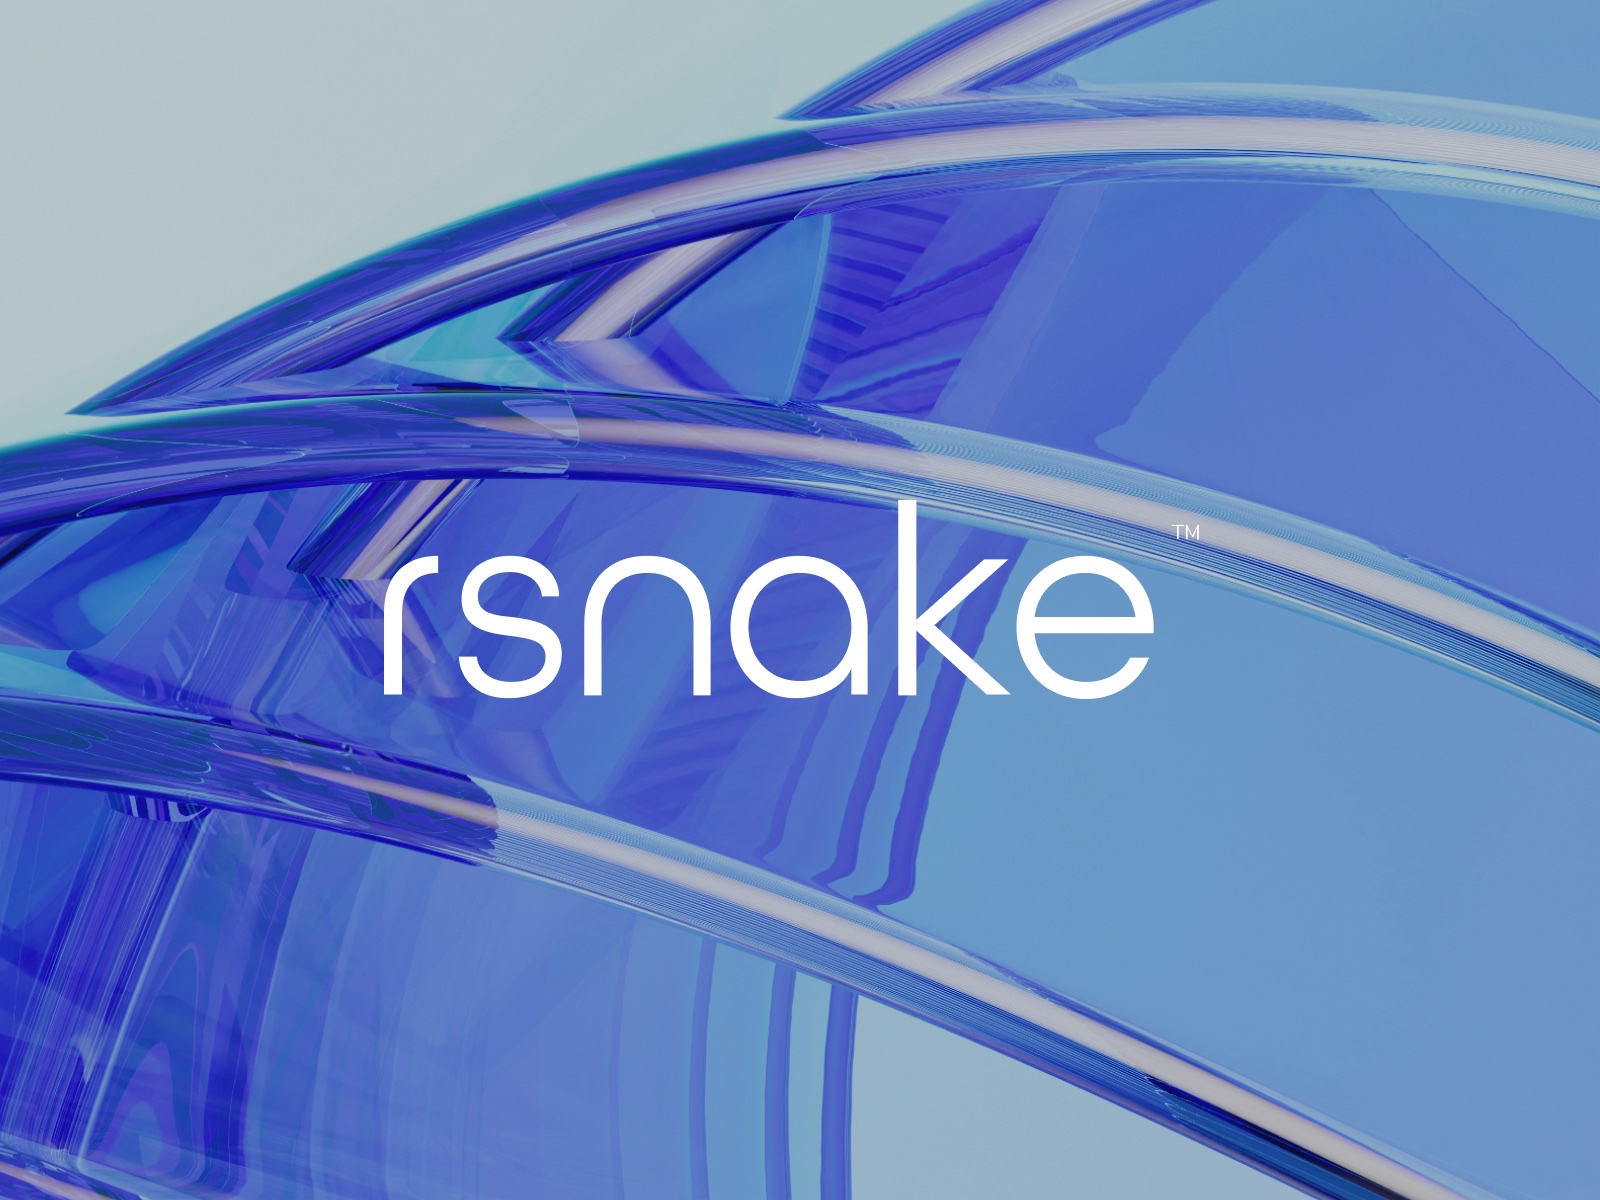 Rattlesnake Group Limited